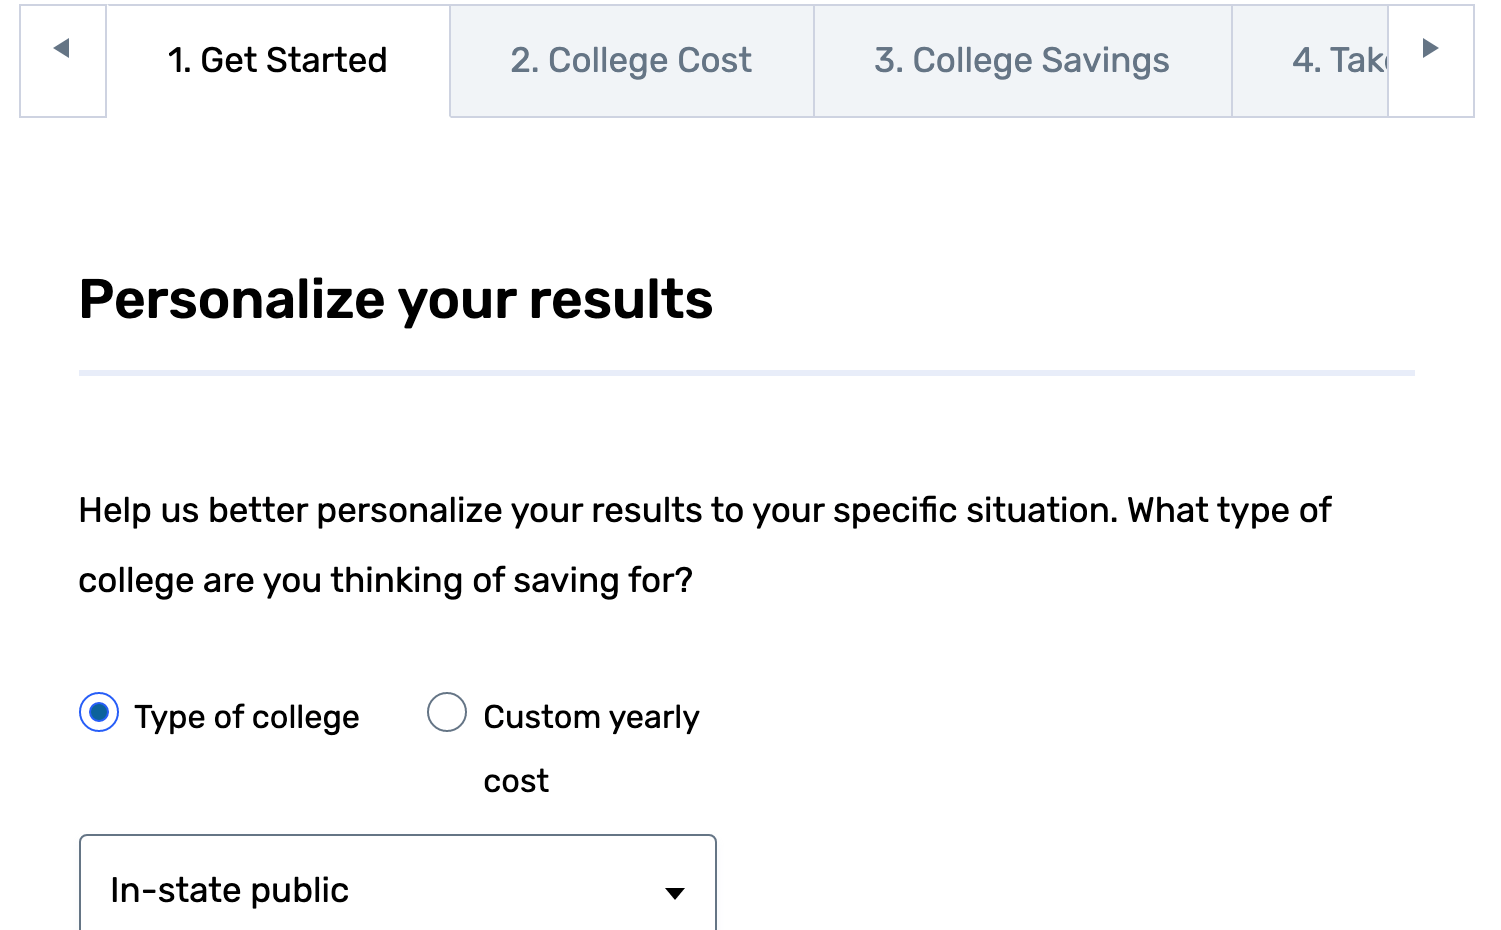 college savings calculator